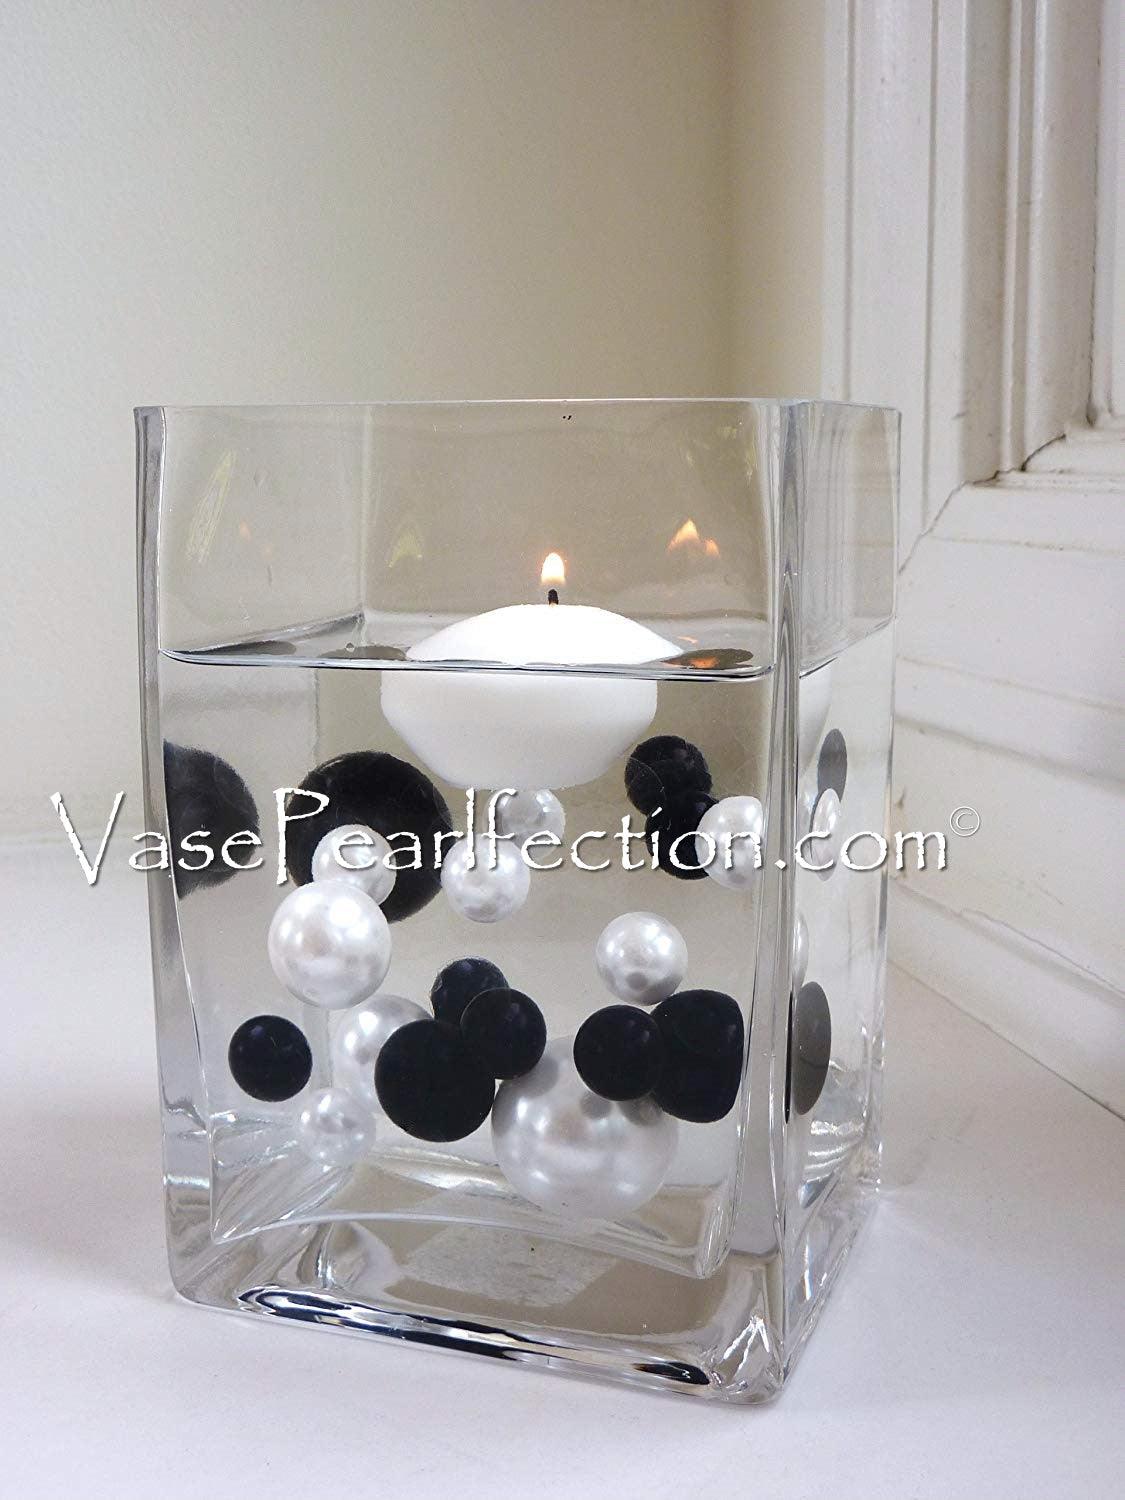 50 Floating Black Pearls-Jumbo Sizes-1 Pk Fills 1 Gallon of Transparent Gels for Floating Effect-With Measured Gels Kit-Option: 3 Fairy Lights-Vase Decorations